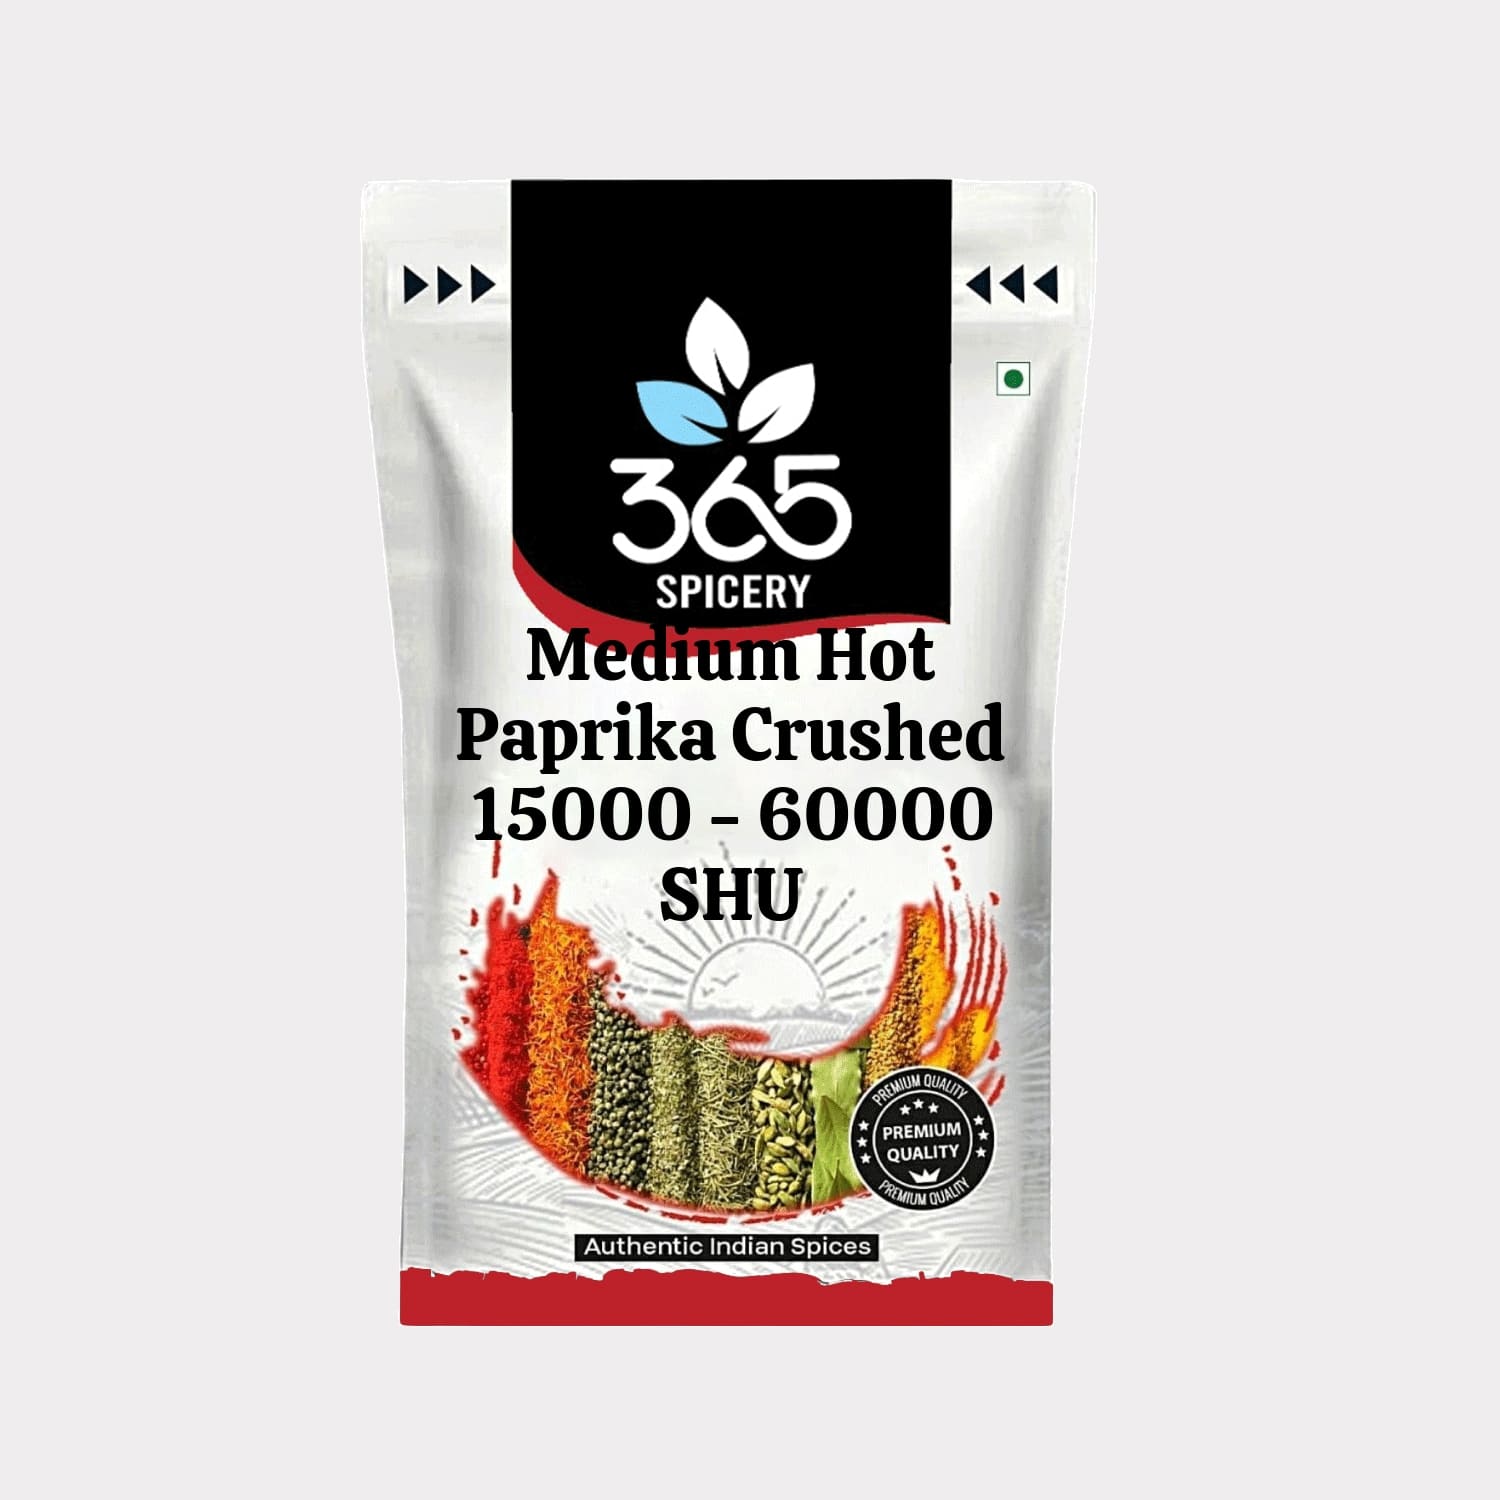 Medium Hot Paprika Crushed 15000 - 20000 SHU